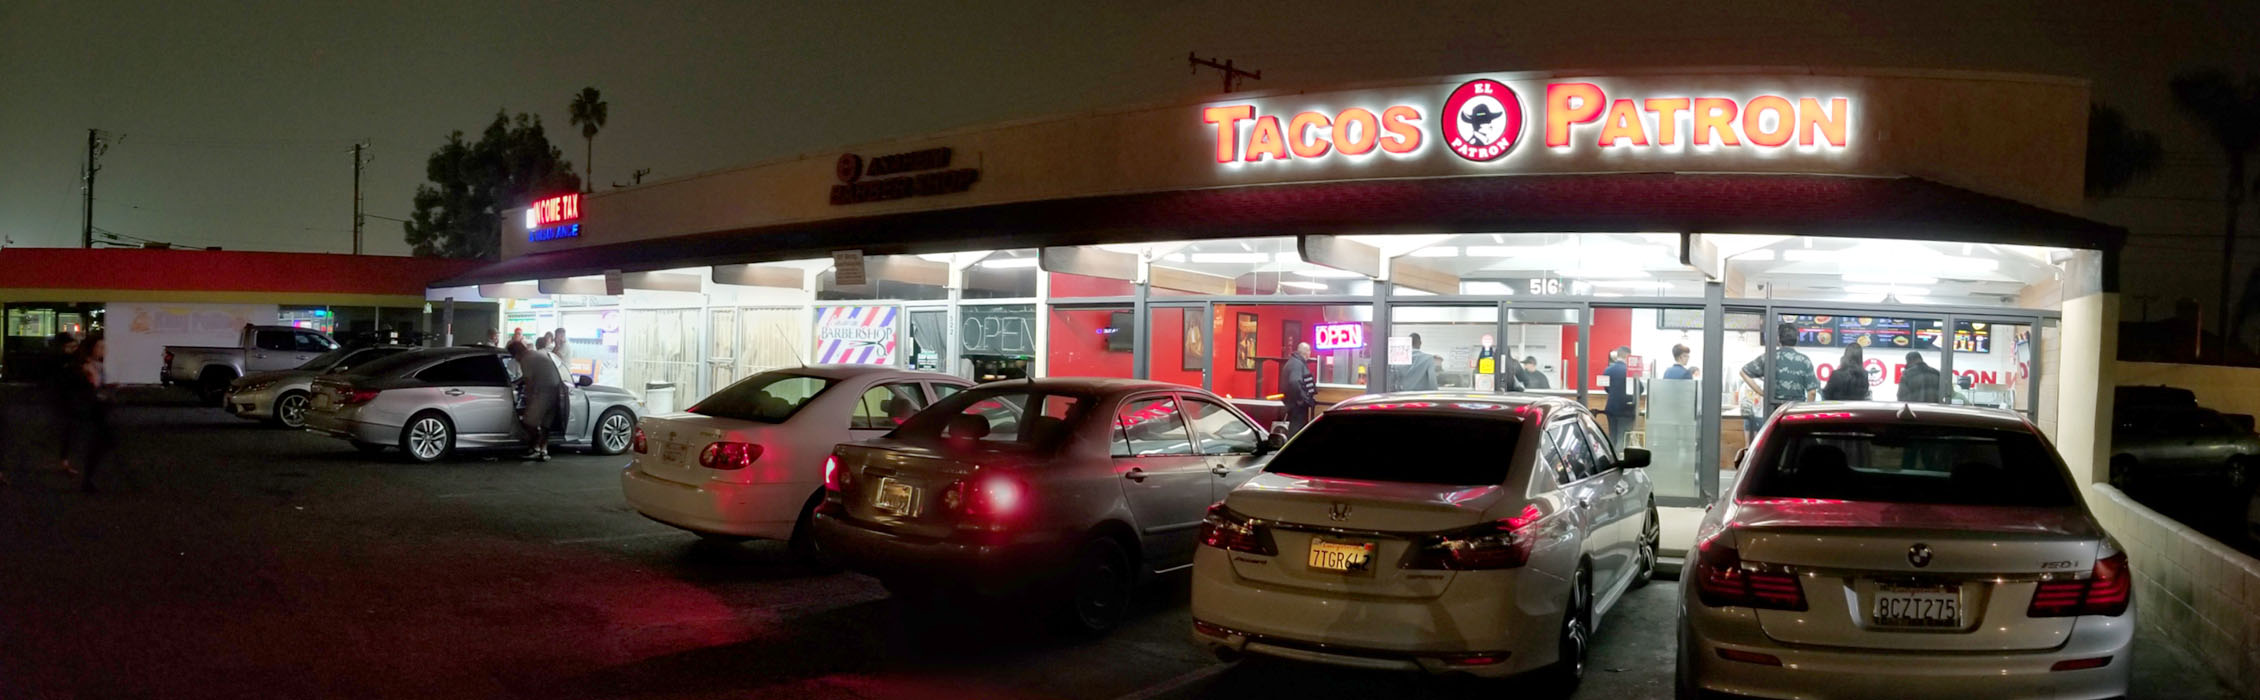 Tacos El Patron Exterior